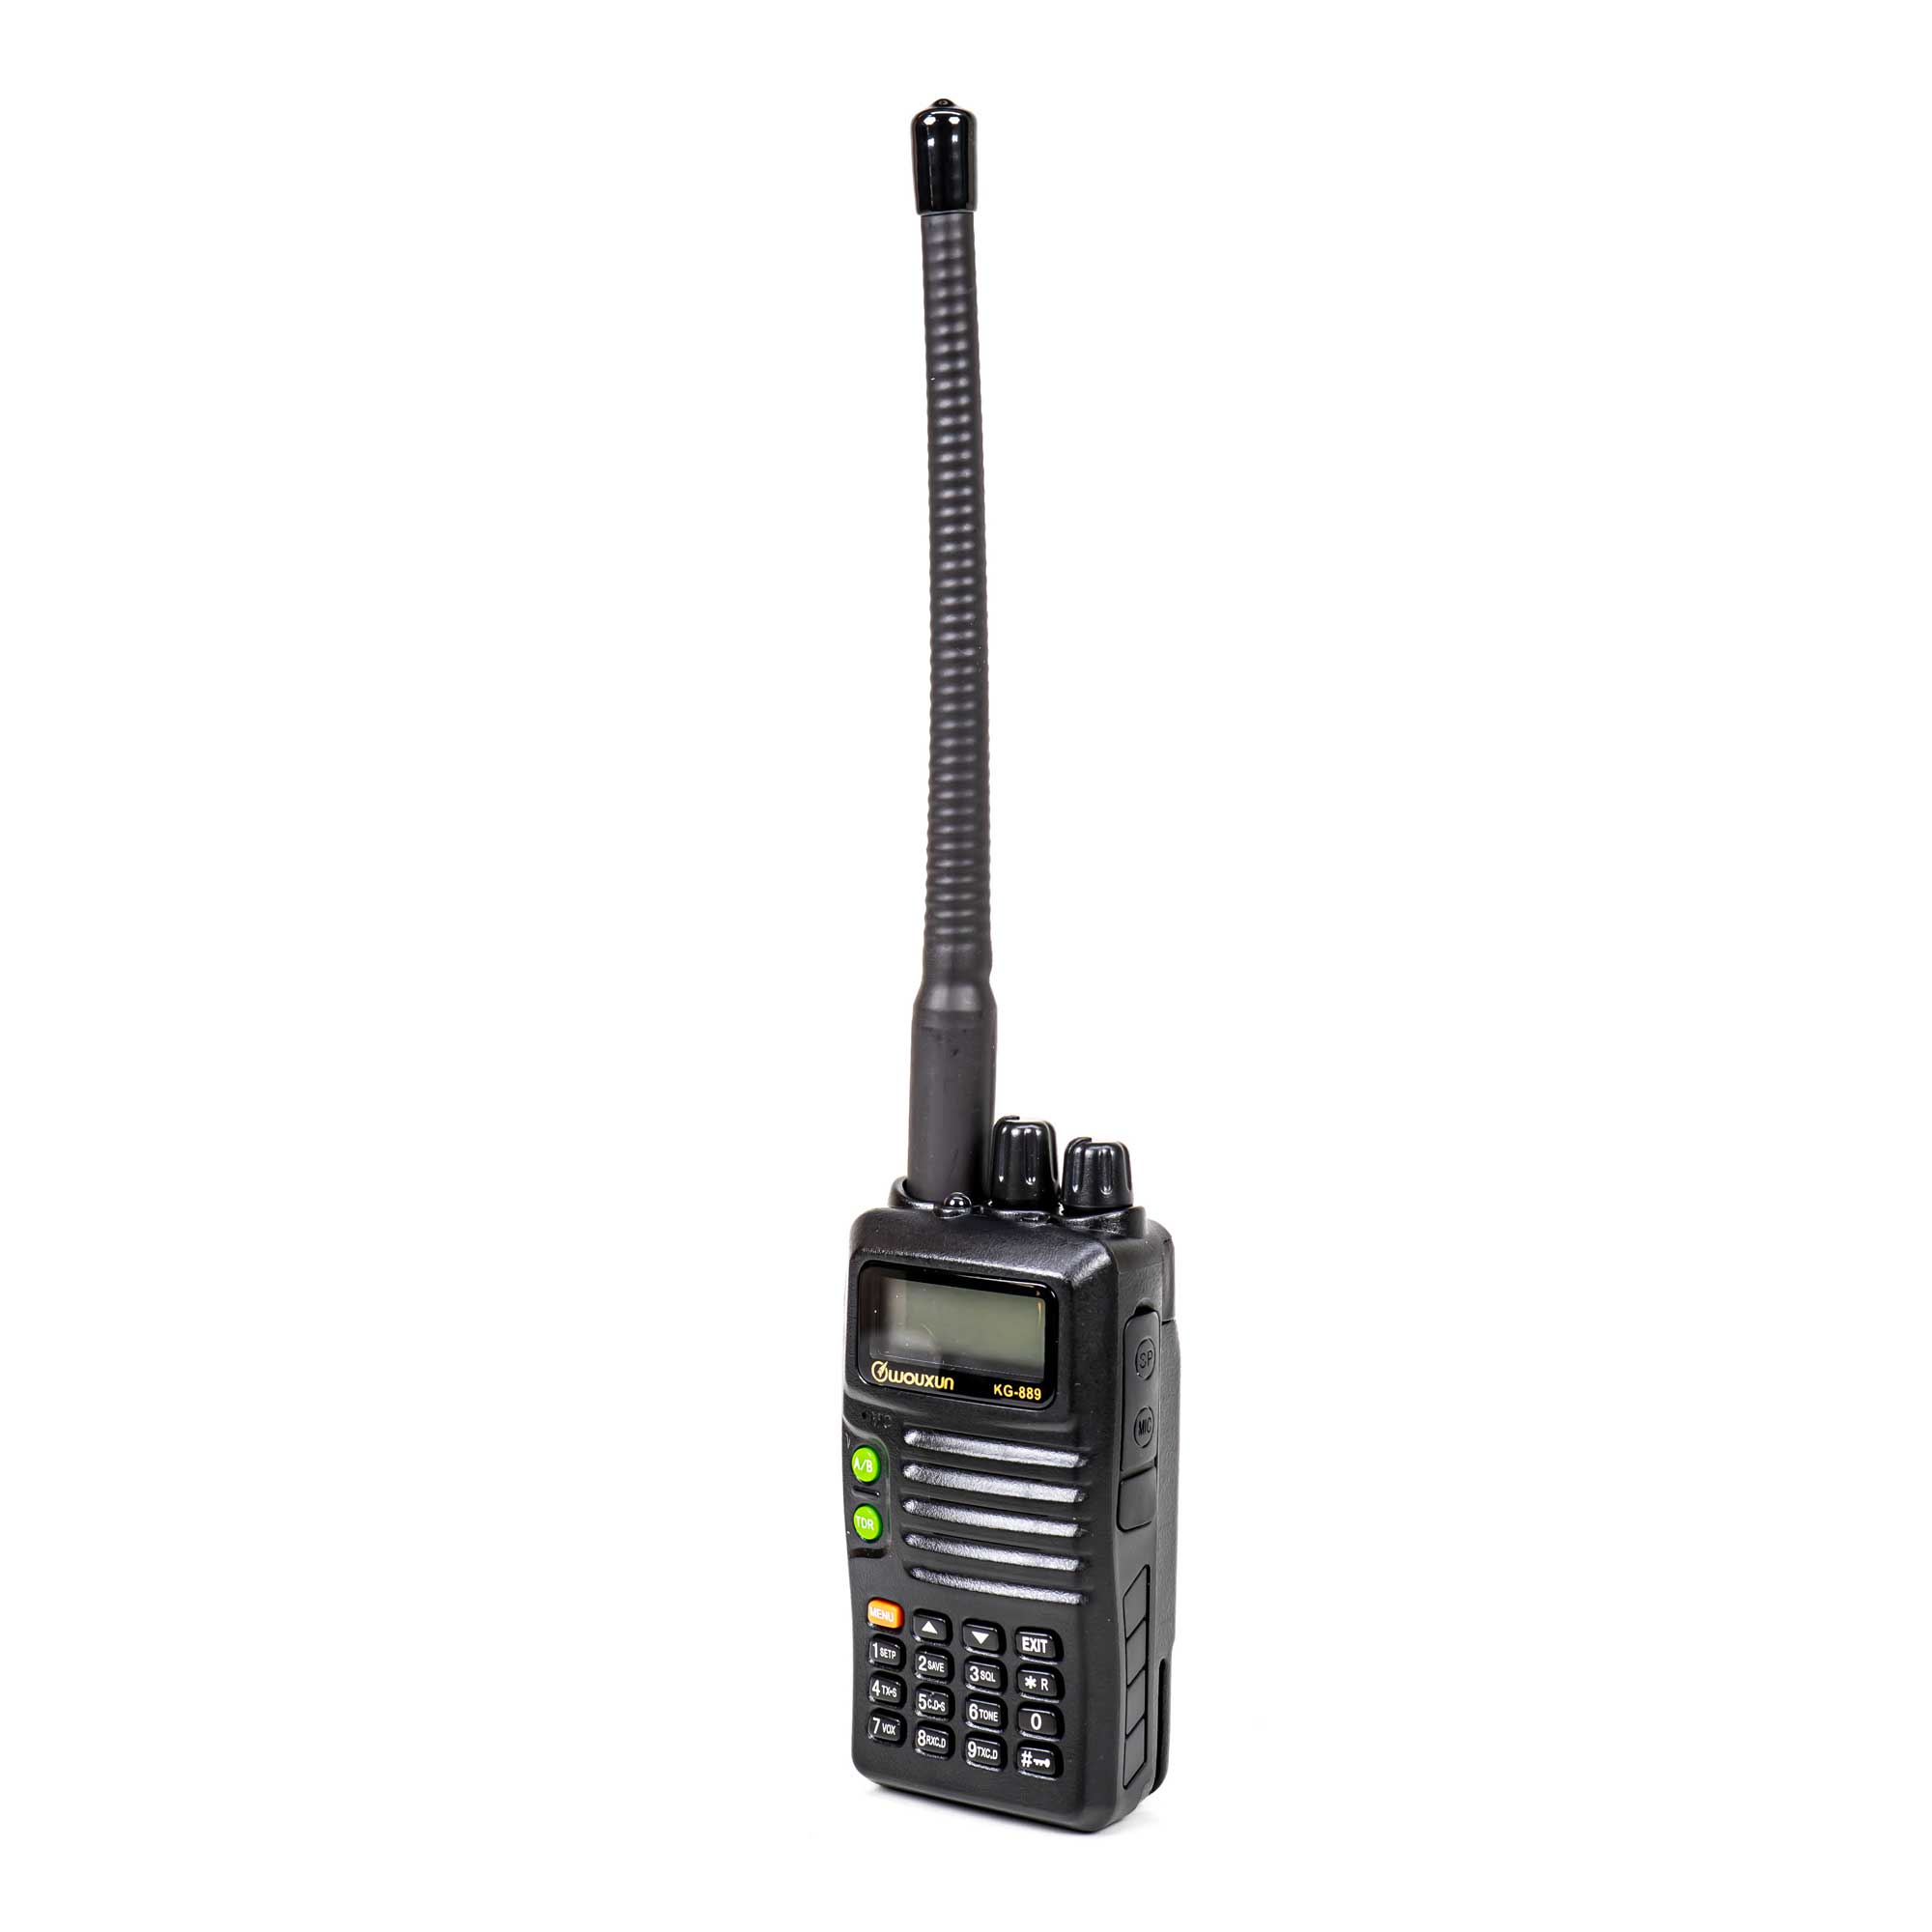 Statie radio portabila VHF PNI KG-889, 66-88 MHz image1